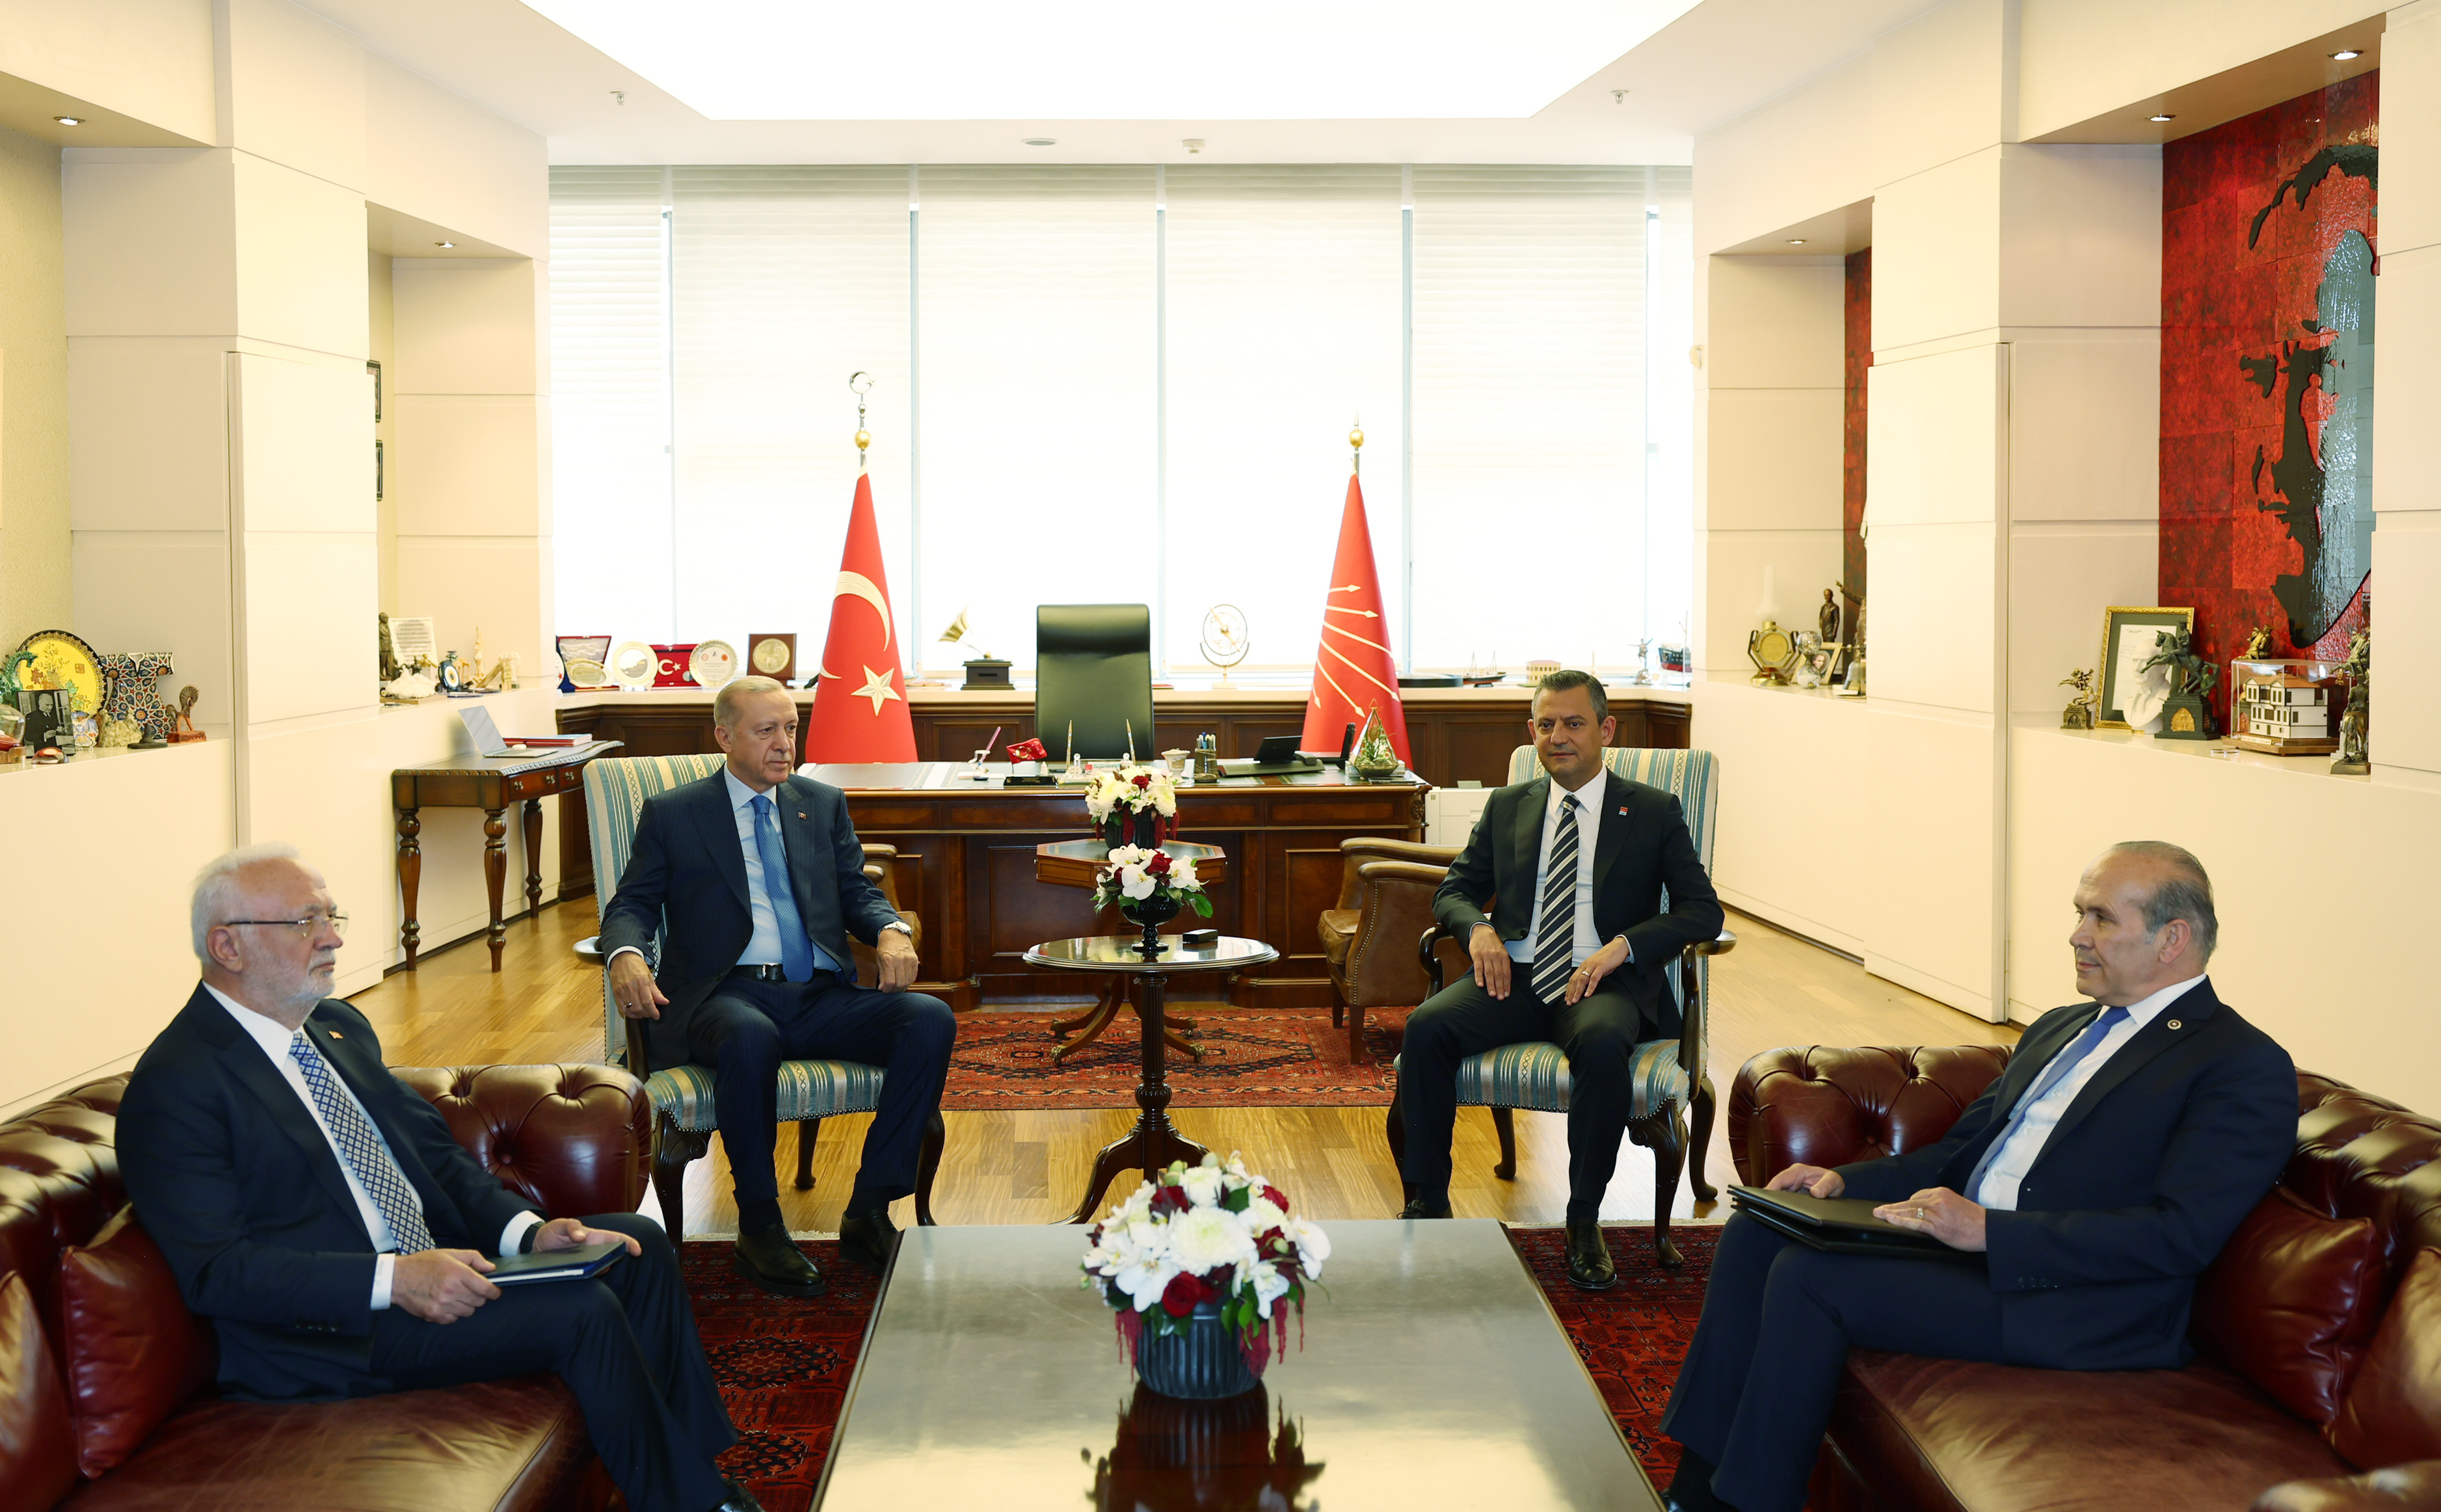 aa-20240611-34843751-34843749-turkish-president-recep-tayyip-erdogan-ozgur-ozel-meeting-in-ankara-001.jpg